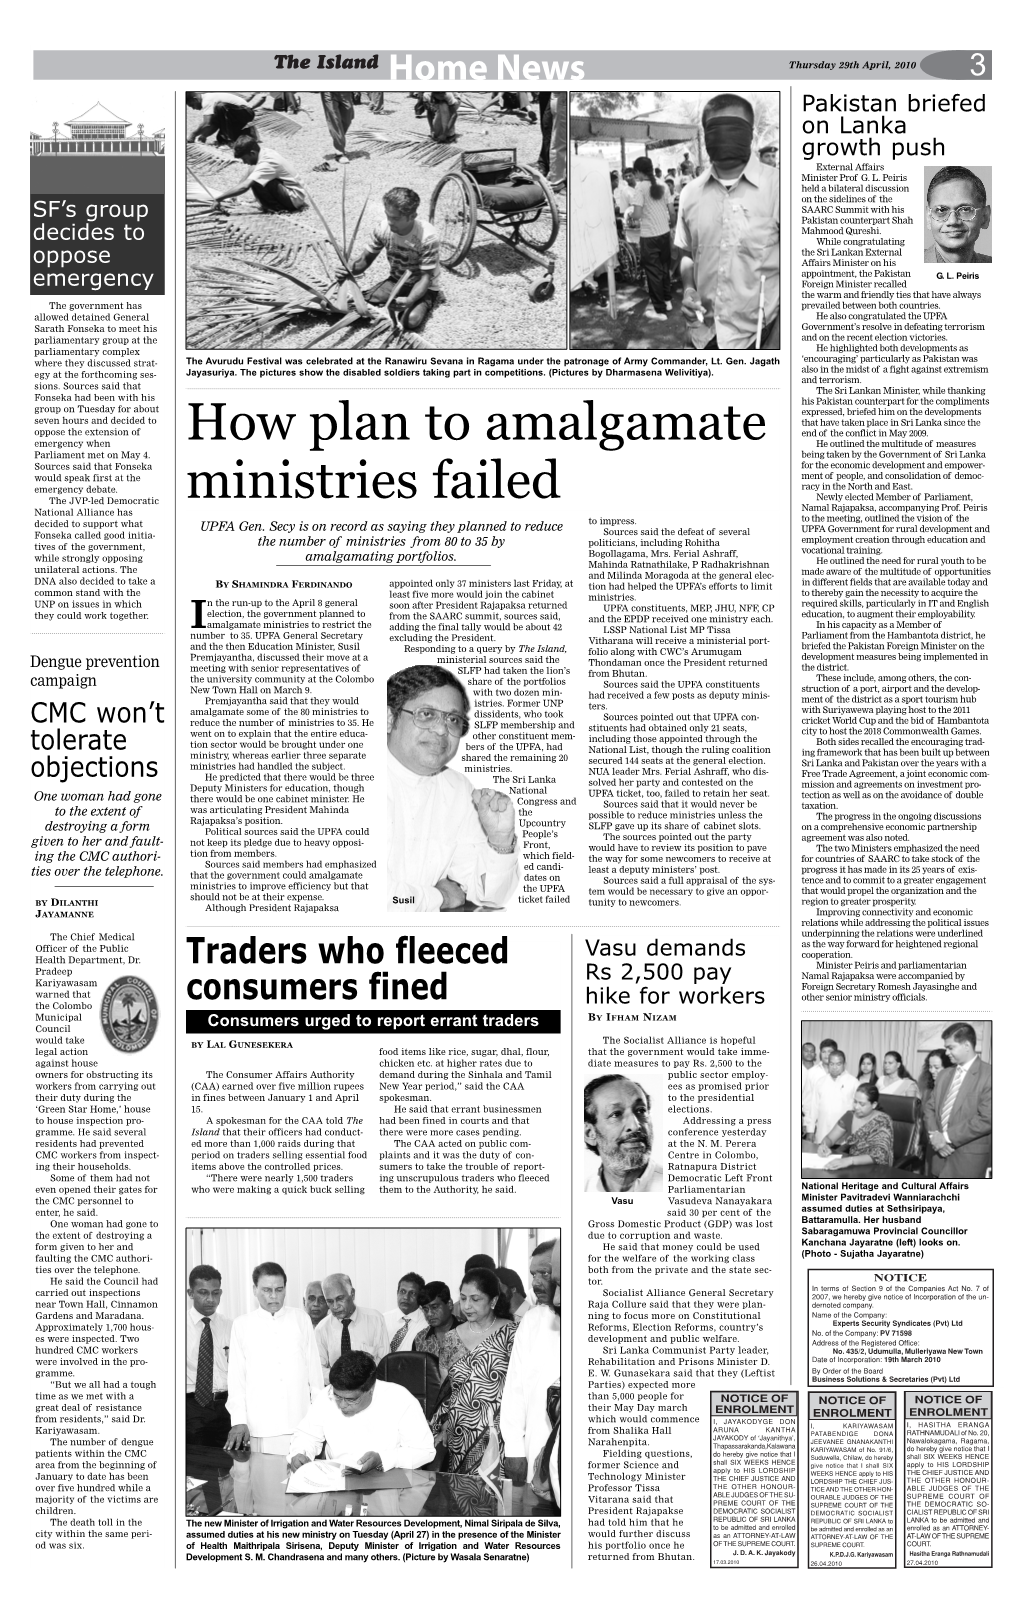 How Plan to Amalgamate Ministries Failed